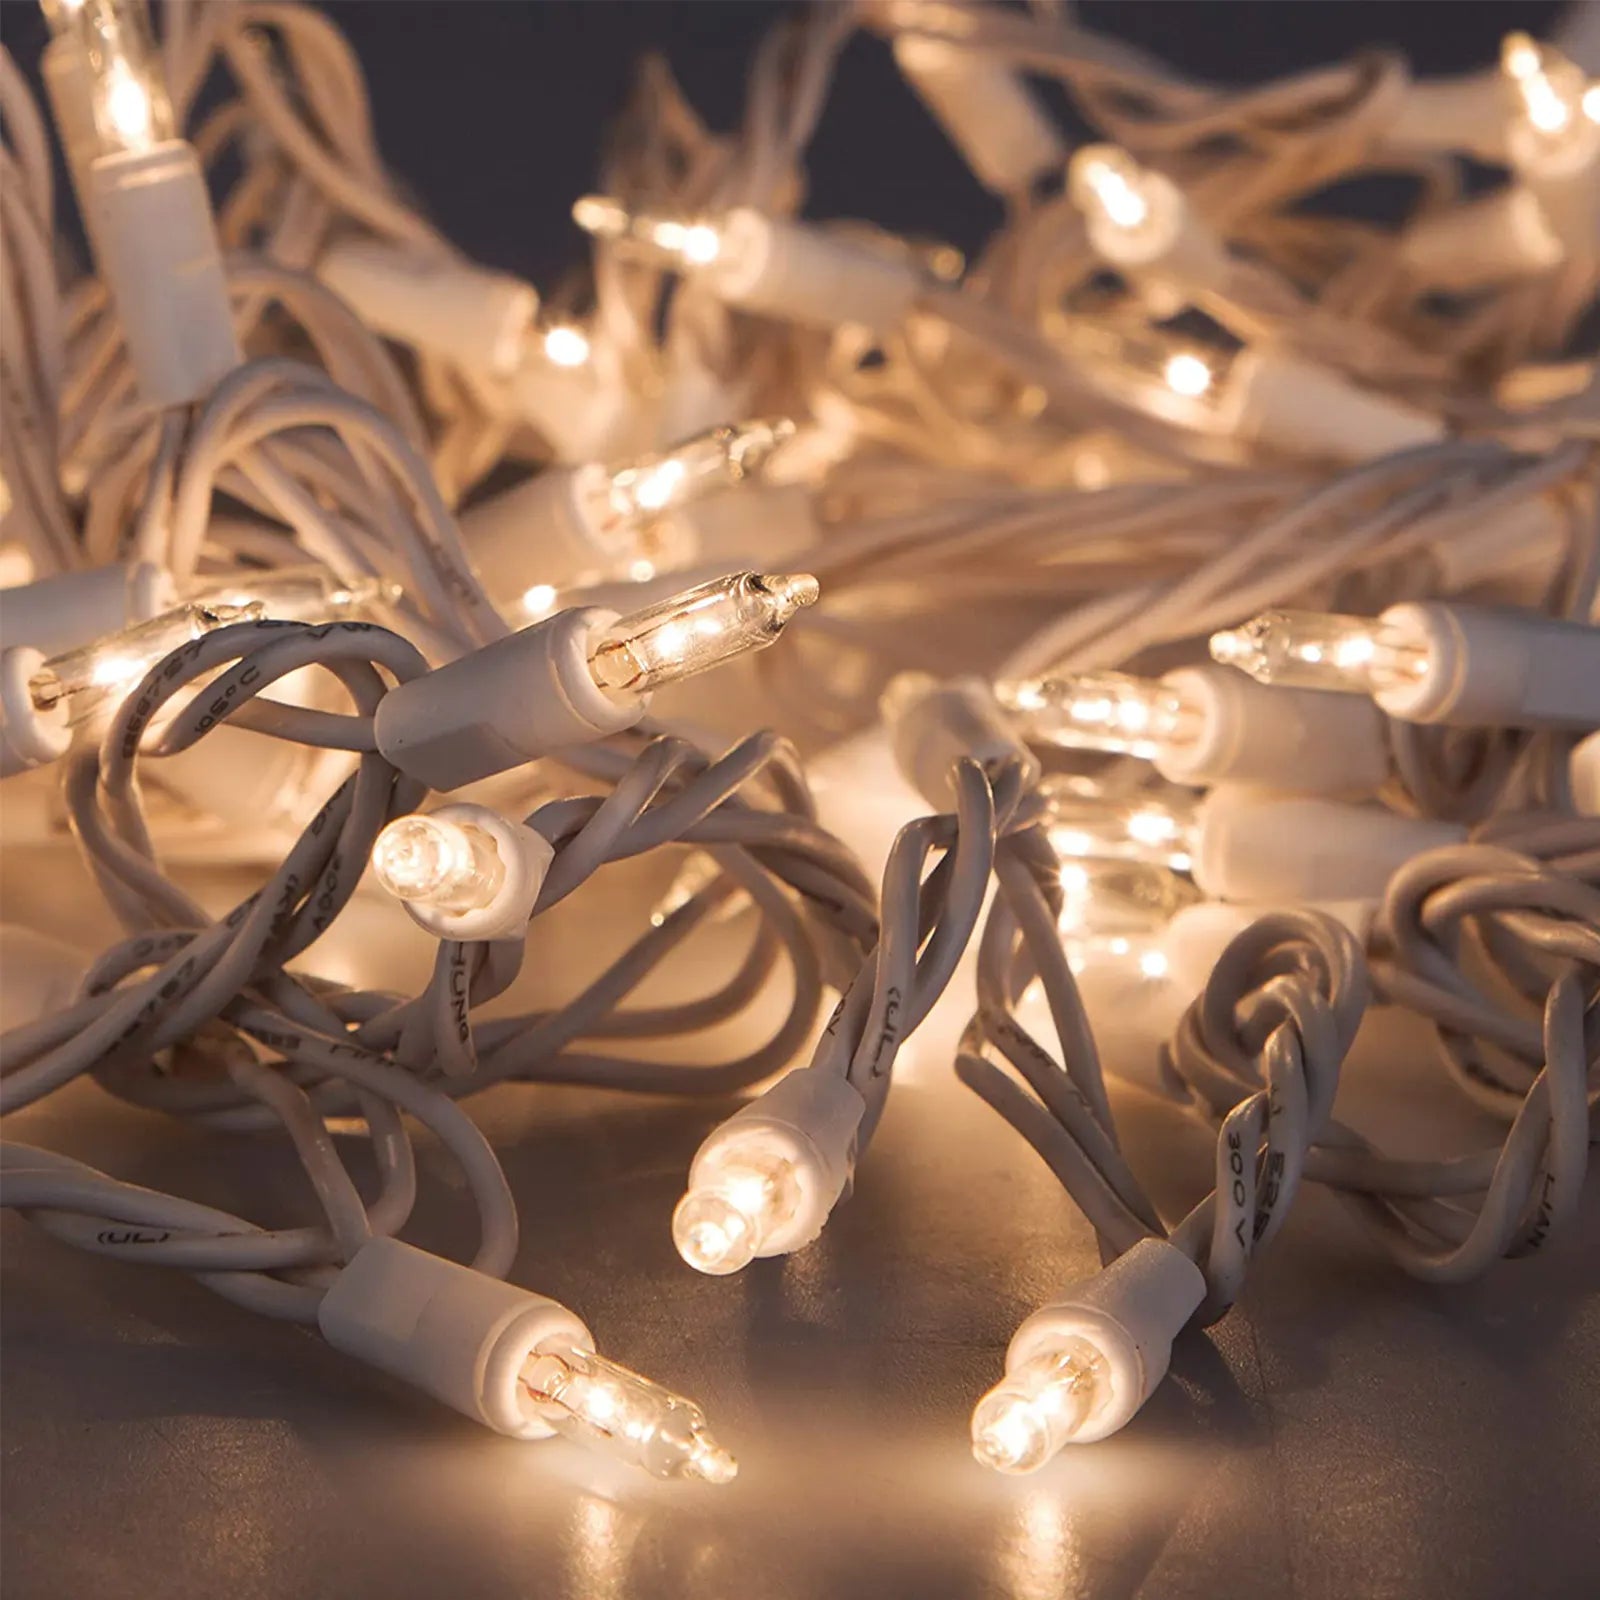 100 luces navideñas transparentes con cable blanco, aprobadas por UL 